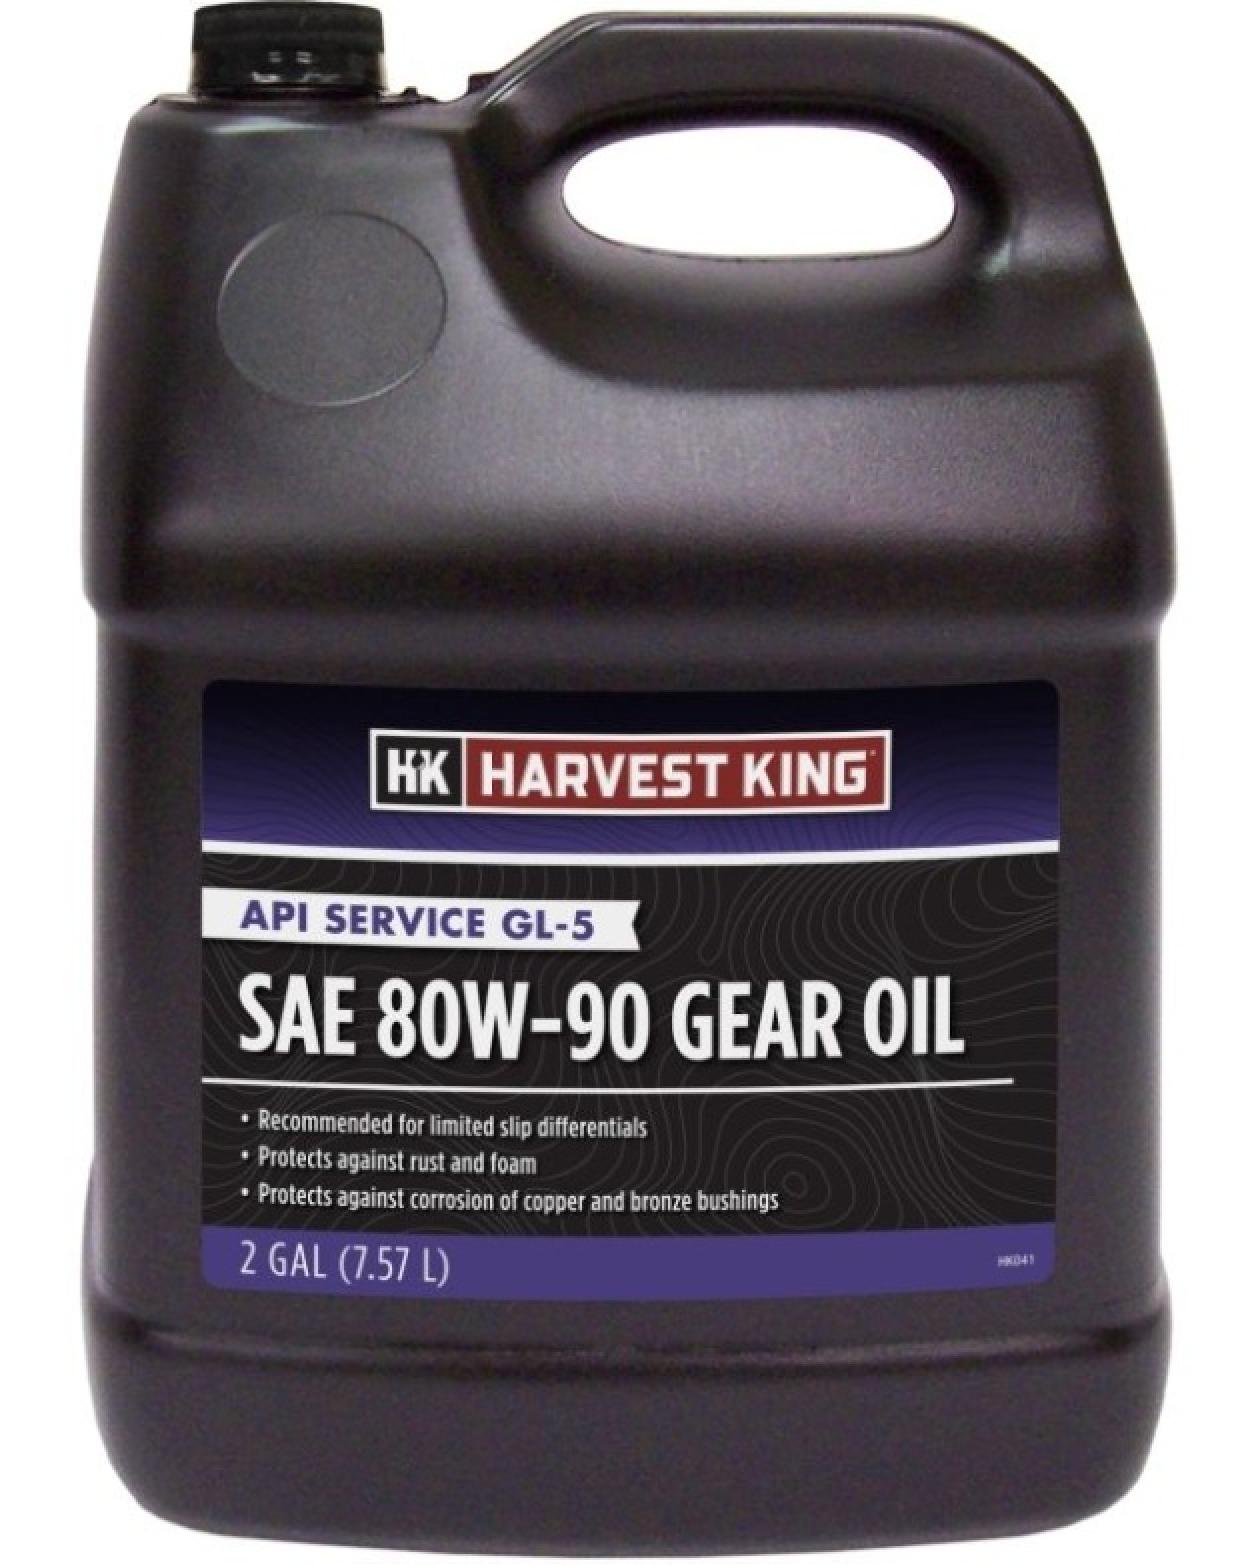 Harvest King API Service GL-5 SAE 80W-90 Gear Oil